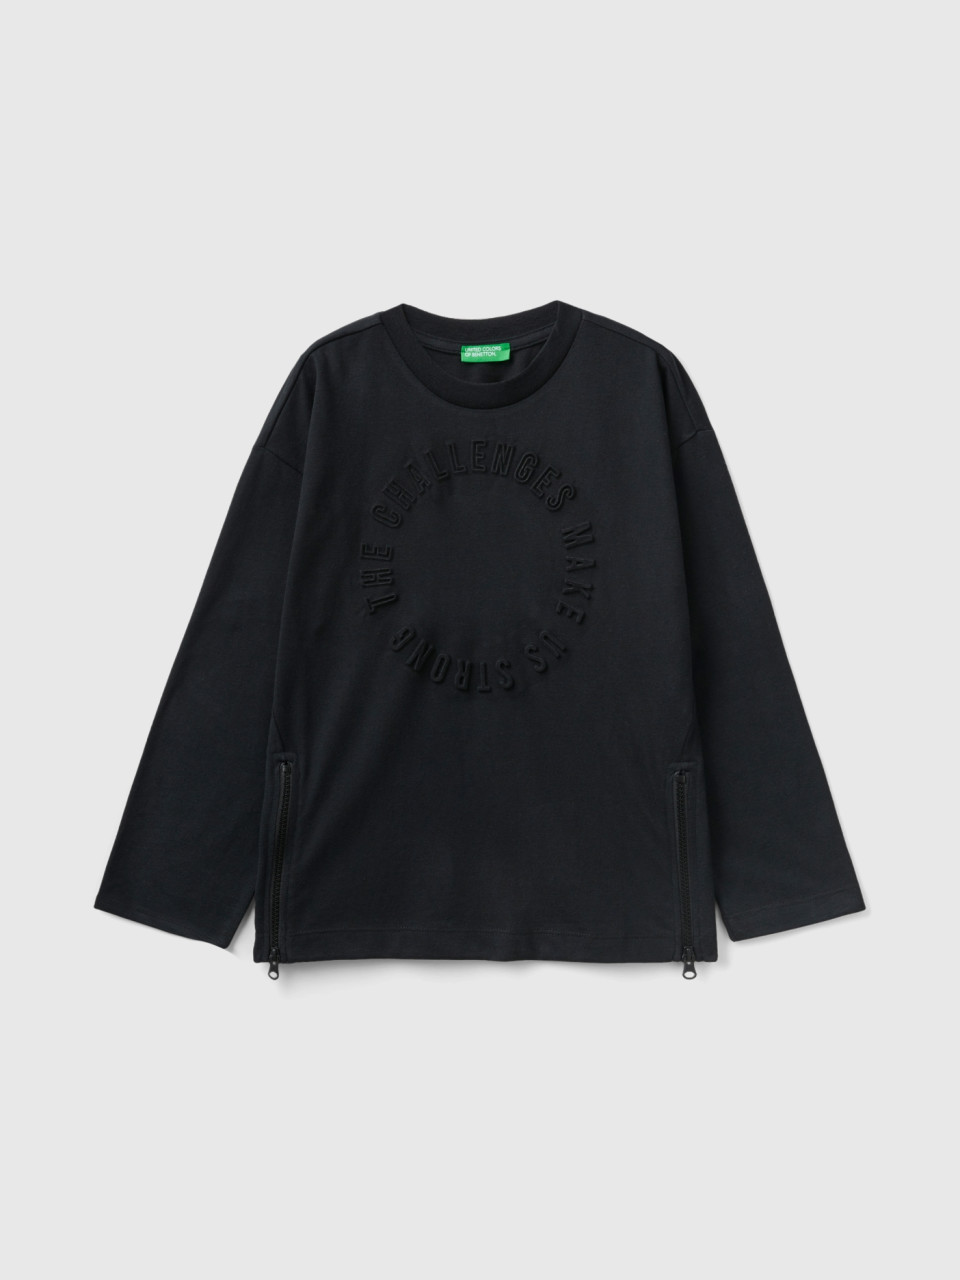 Benetton, Oversized Fit Sweatshirt With Embossed Print, Black, Kids